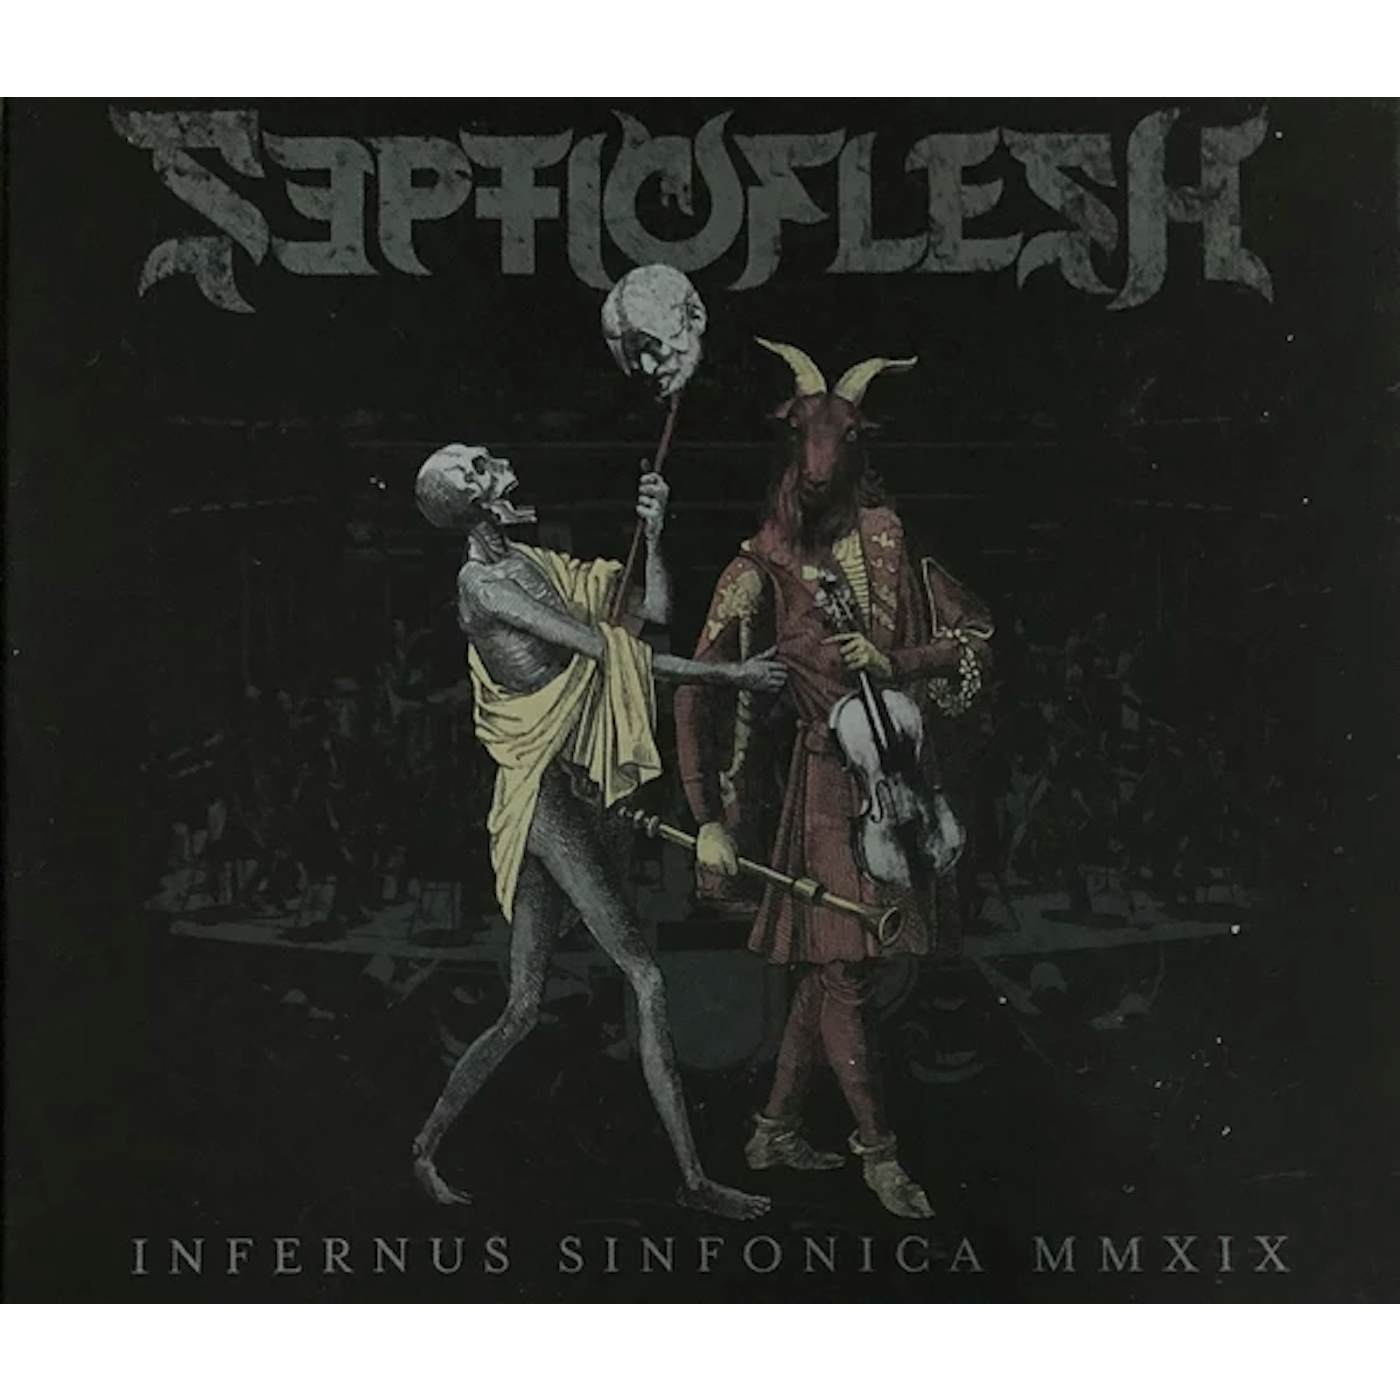 Septicflesh Infernus Sinfonica MMXIX Vinyl Record